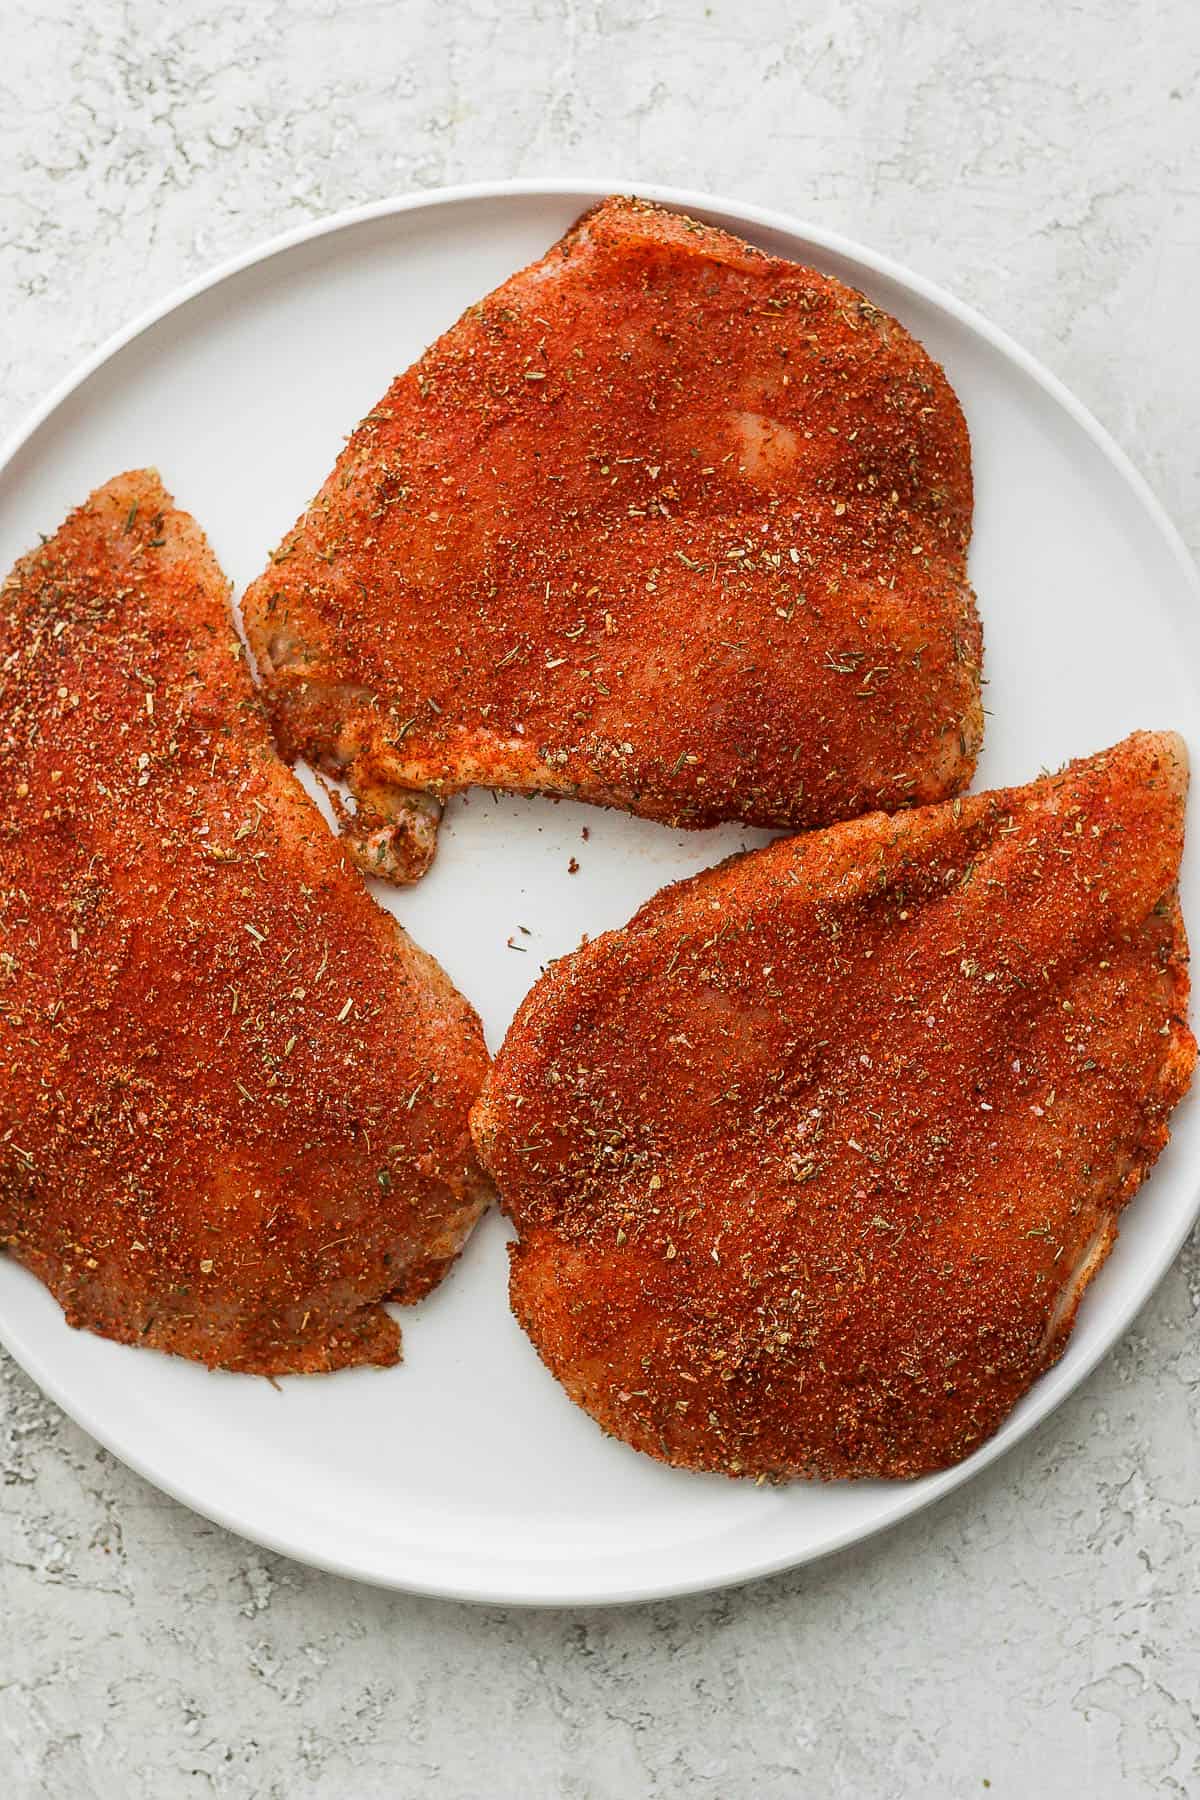 Chicken breasts seasoned with blackened seasoning on a plate.